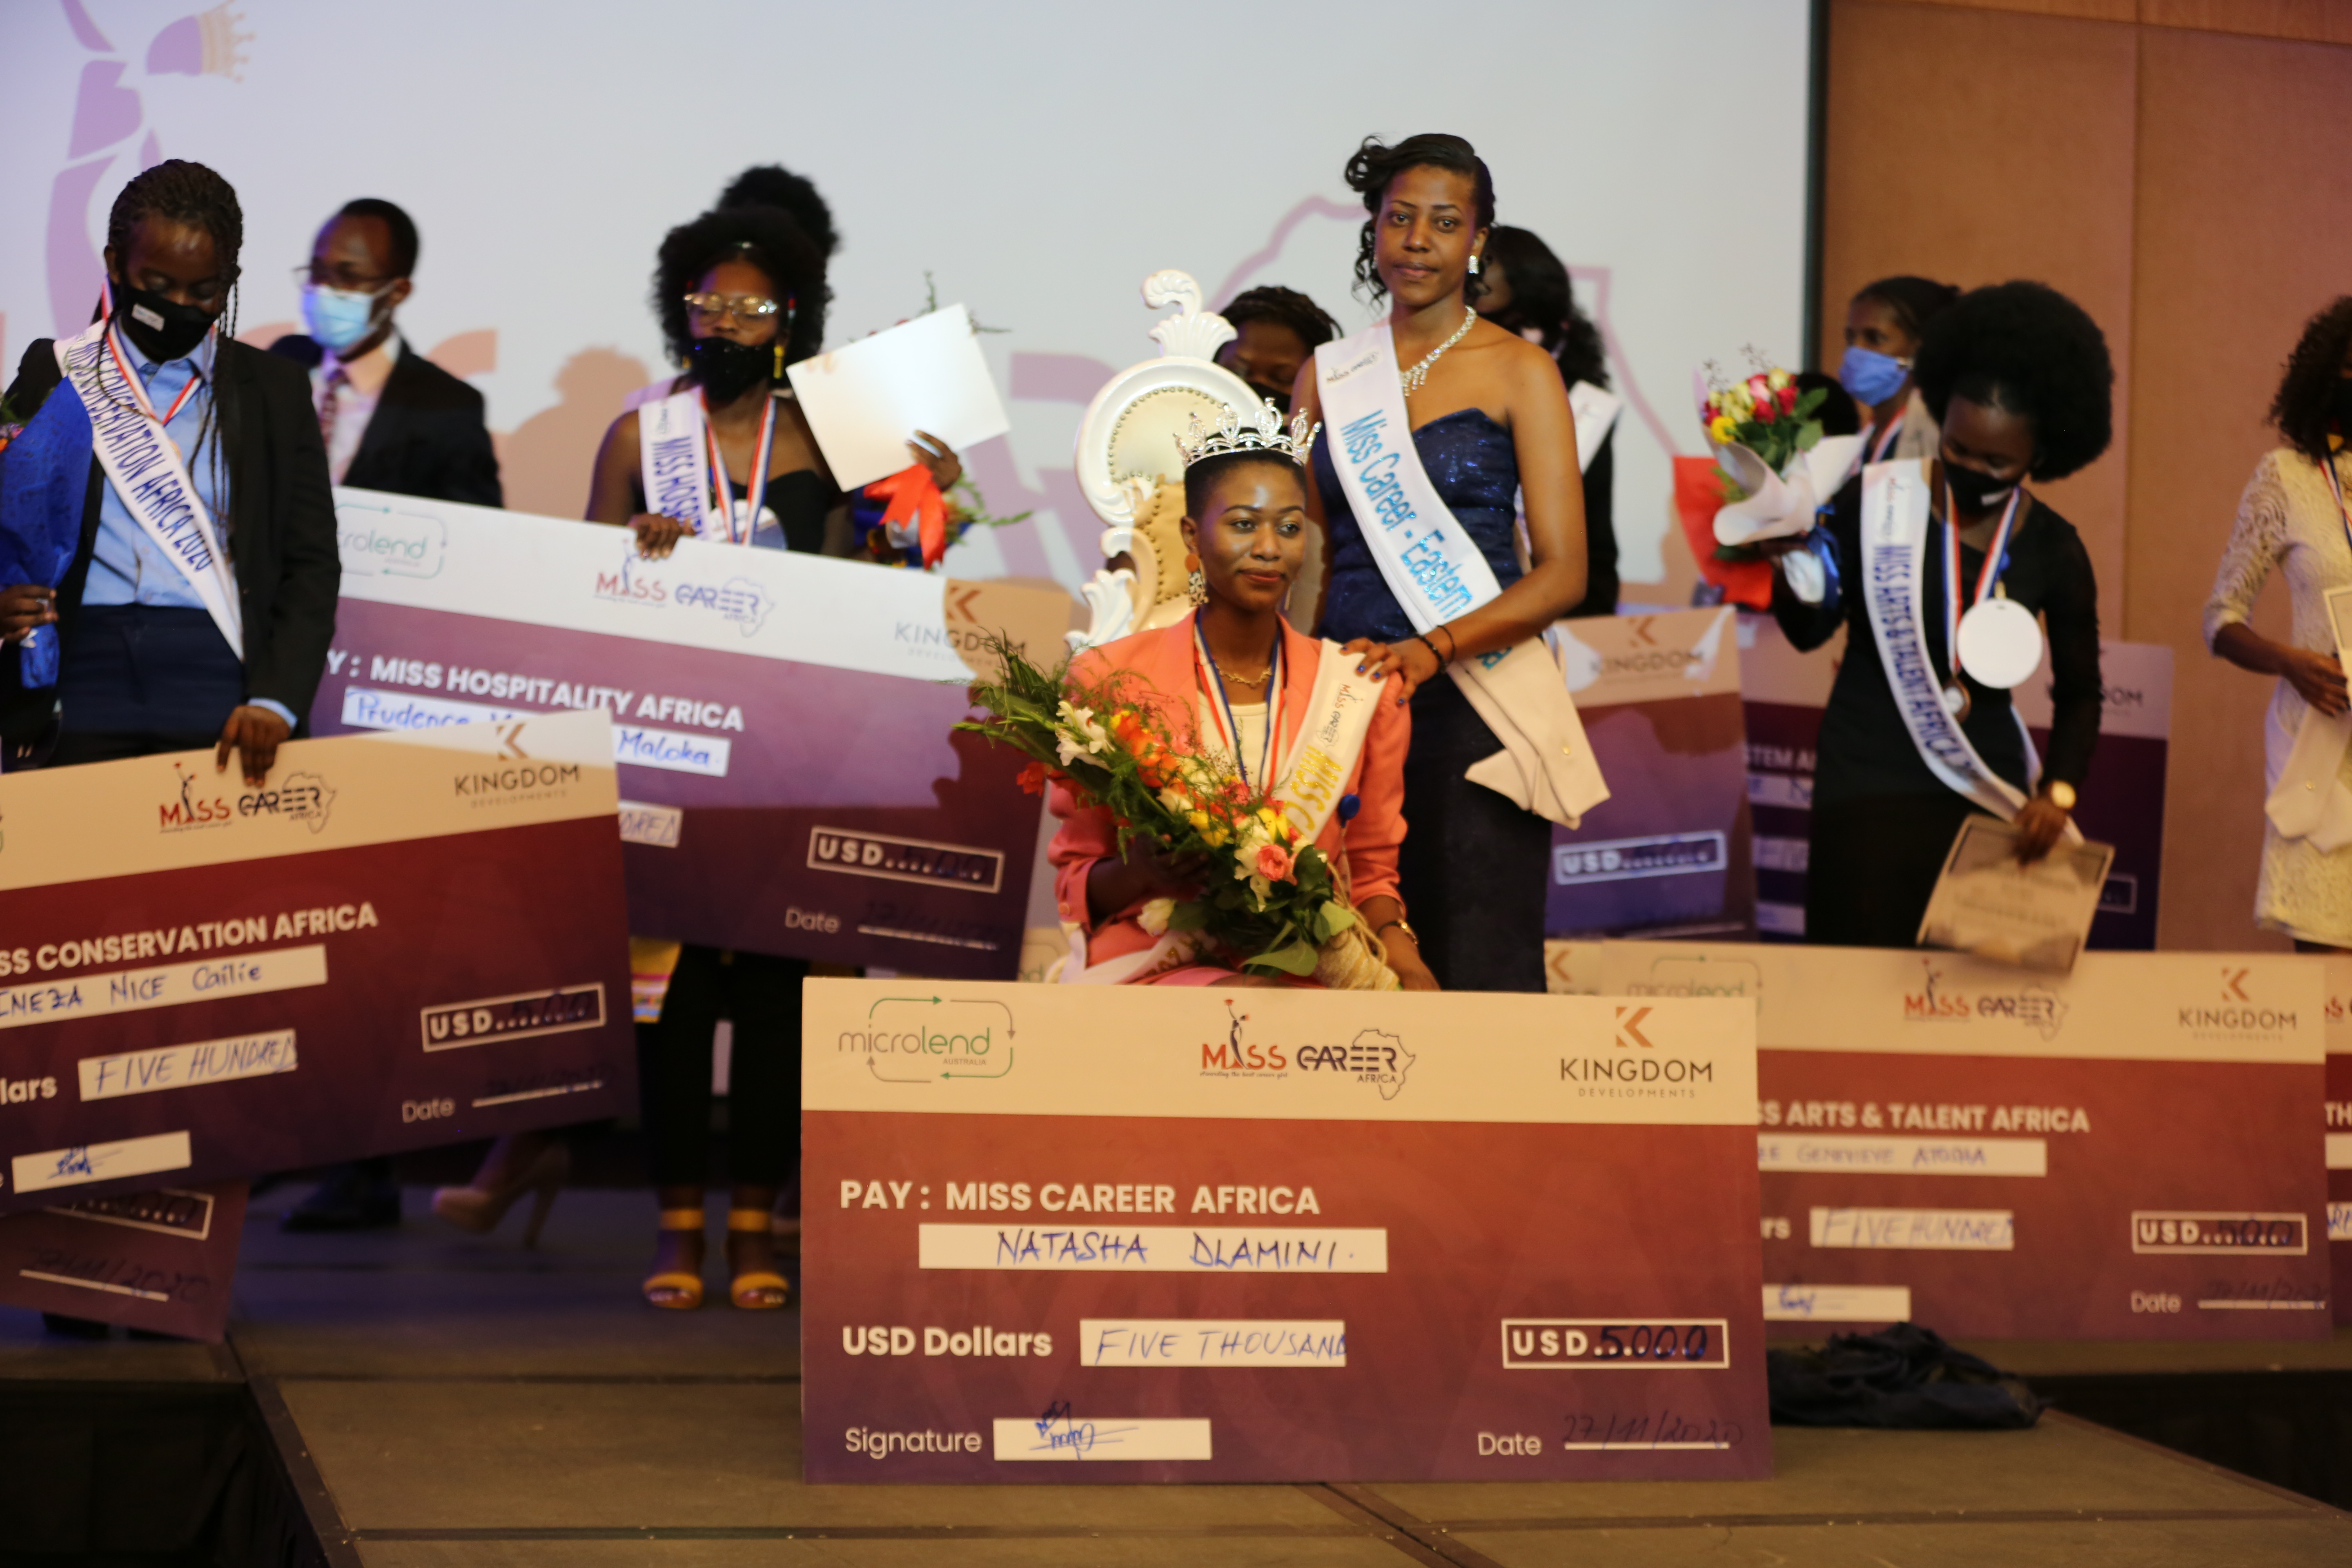 Natasha Dlamini (3rd from right) was in joy after winning the 2020 Miss Career Africa . /Craish Bahizi